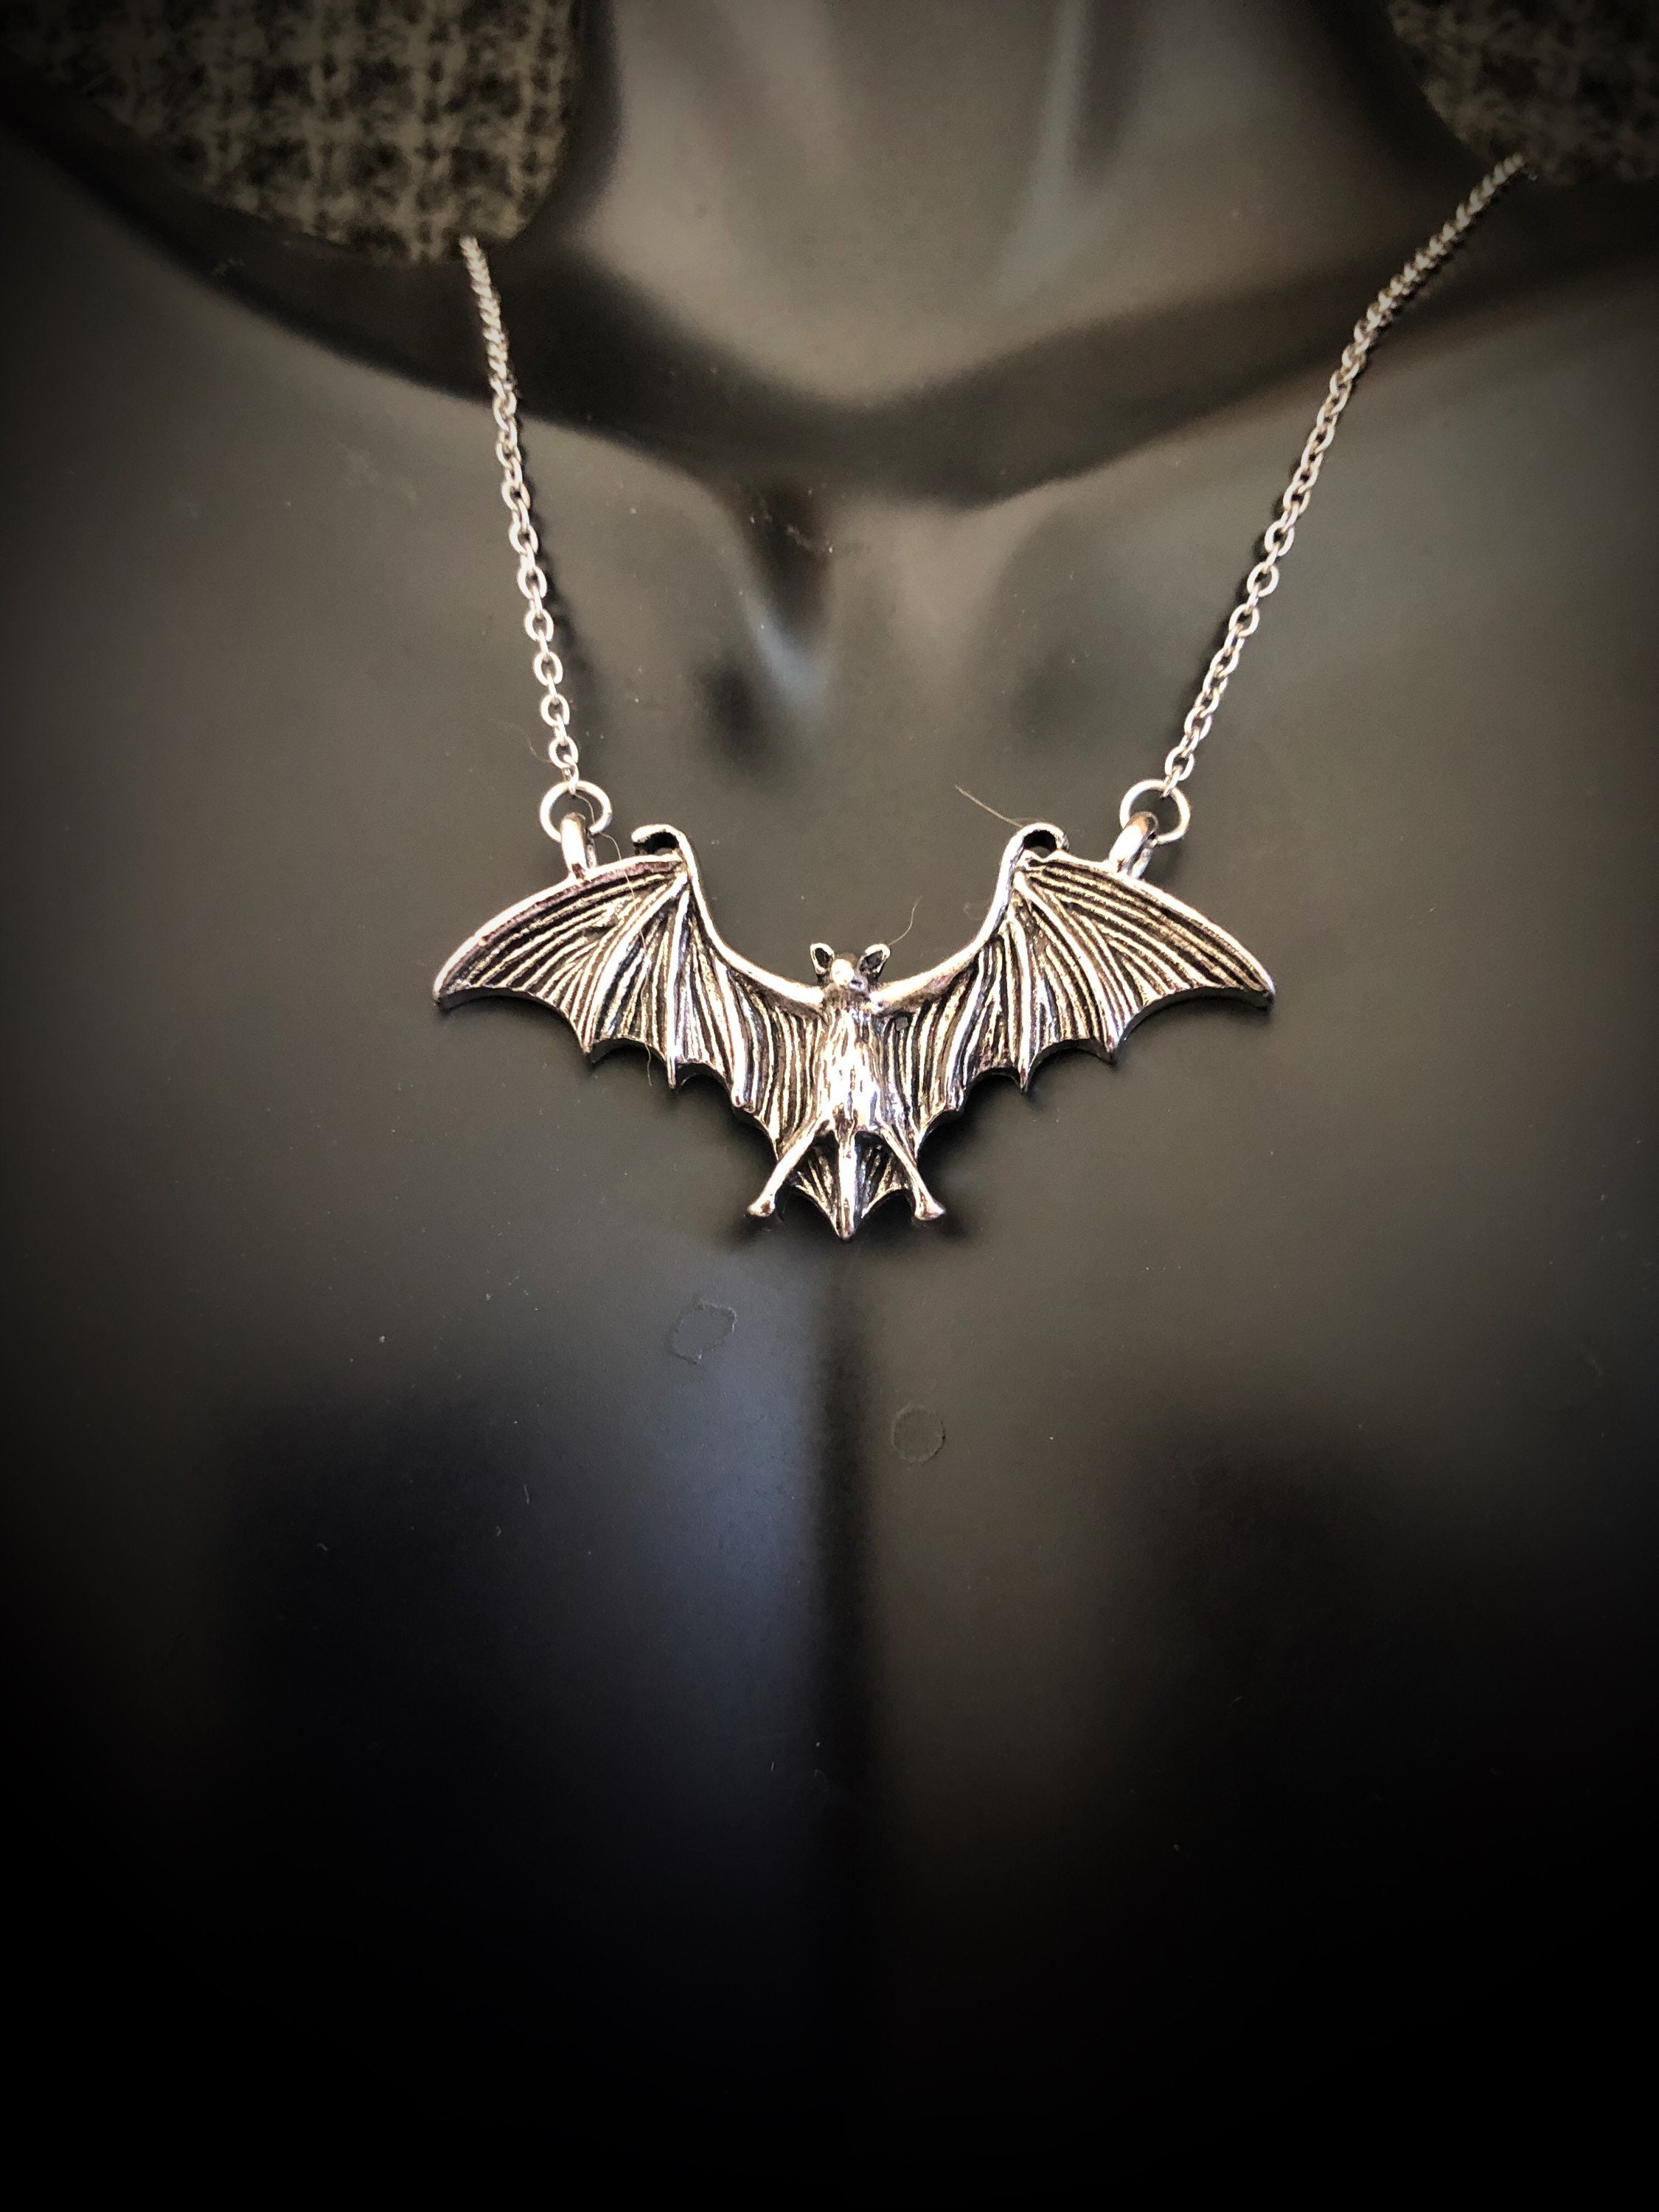 Bat skeleton necklace - Delftia science jewelry